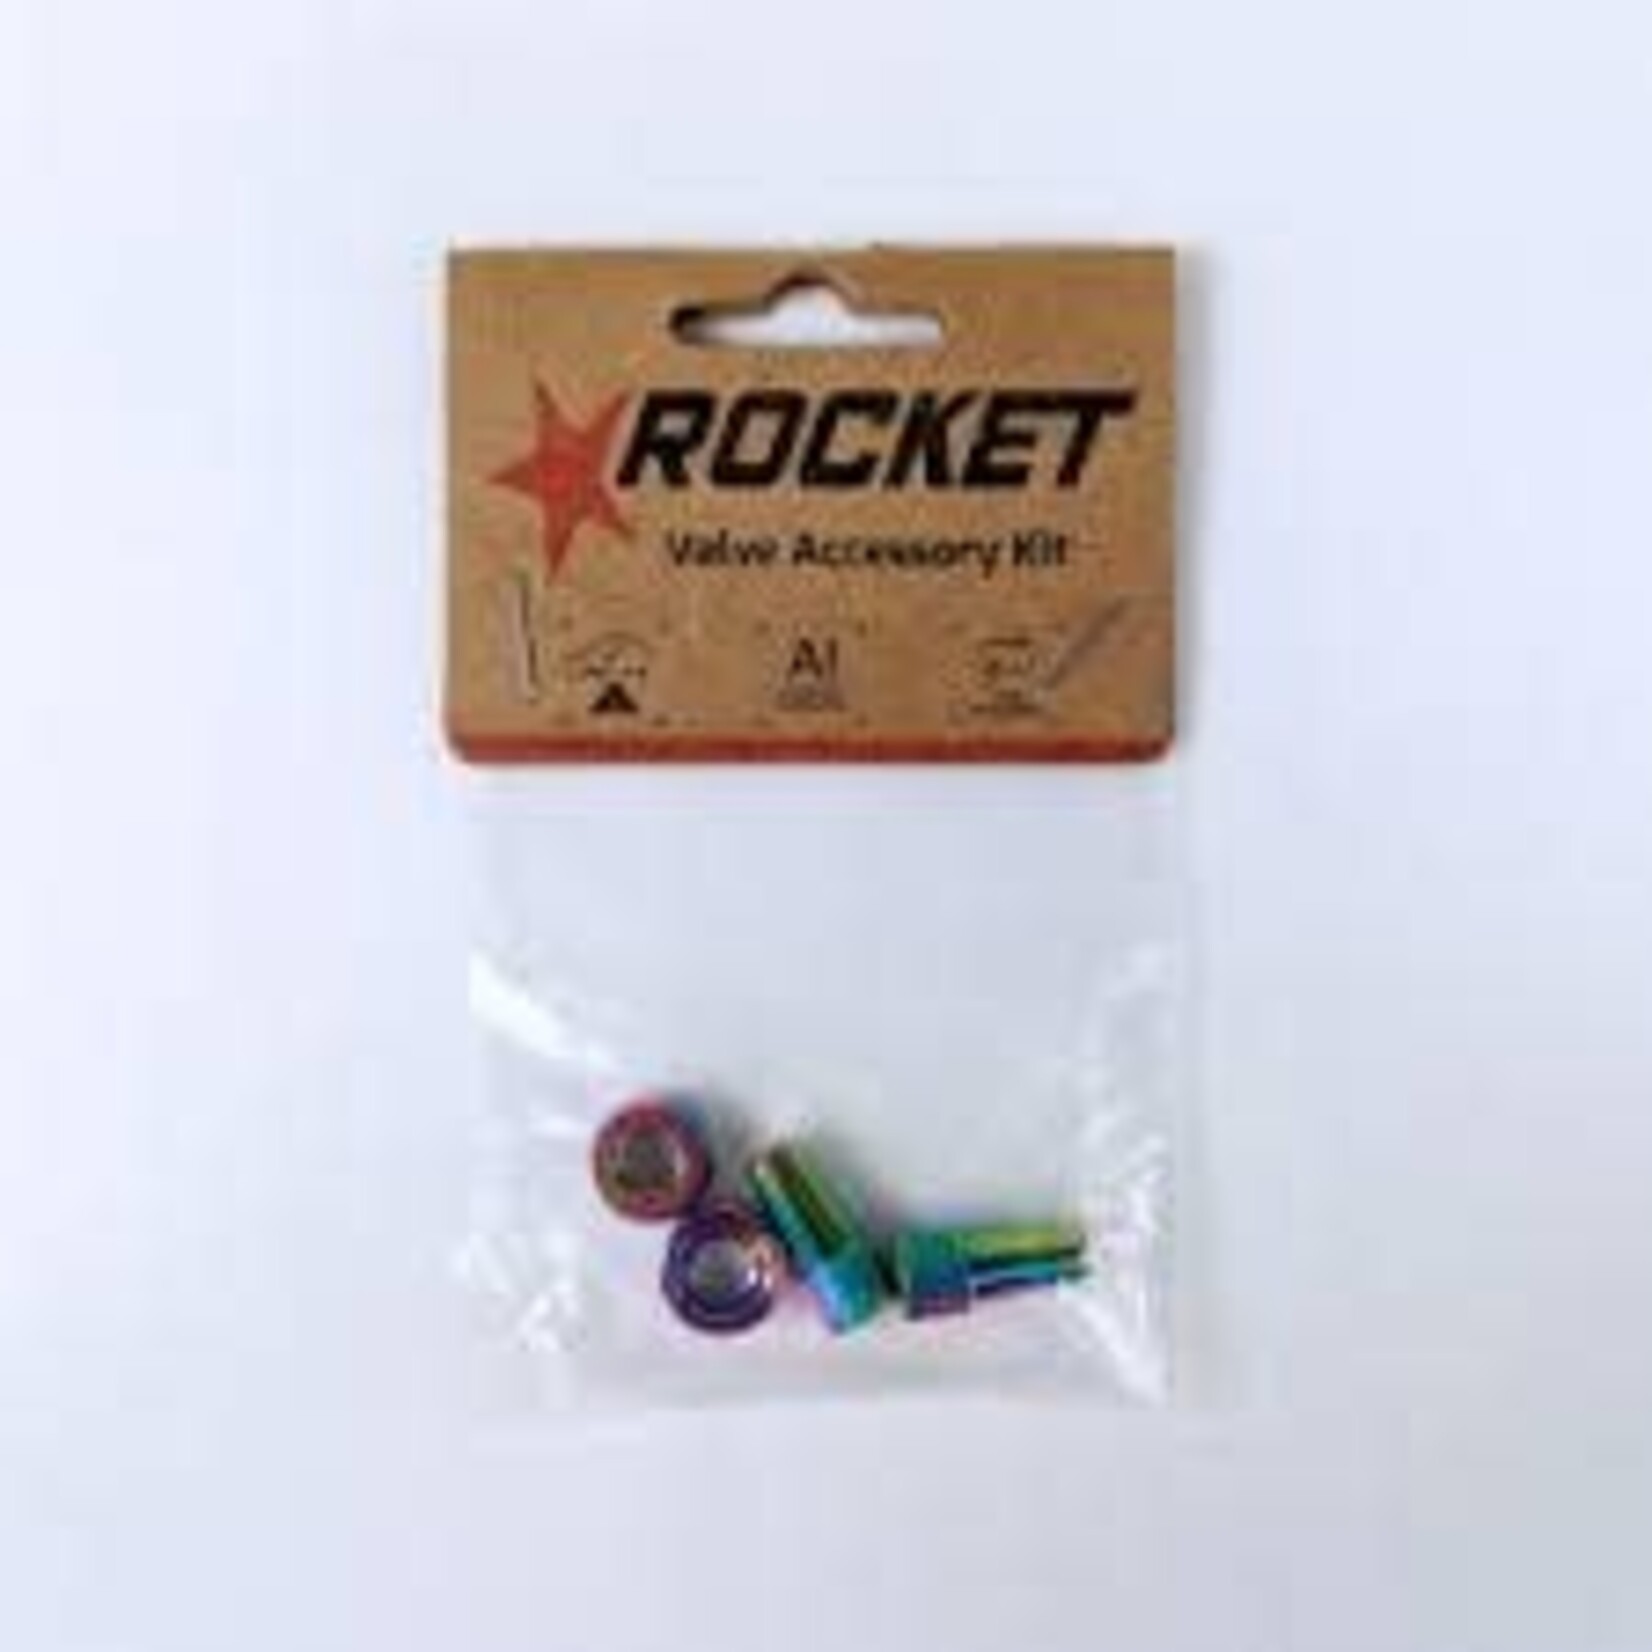 Rocket ROCKET Tubeless Accessory Kit